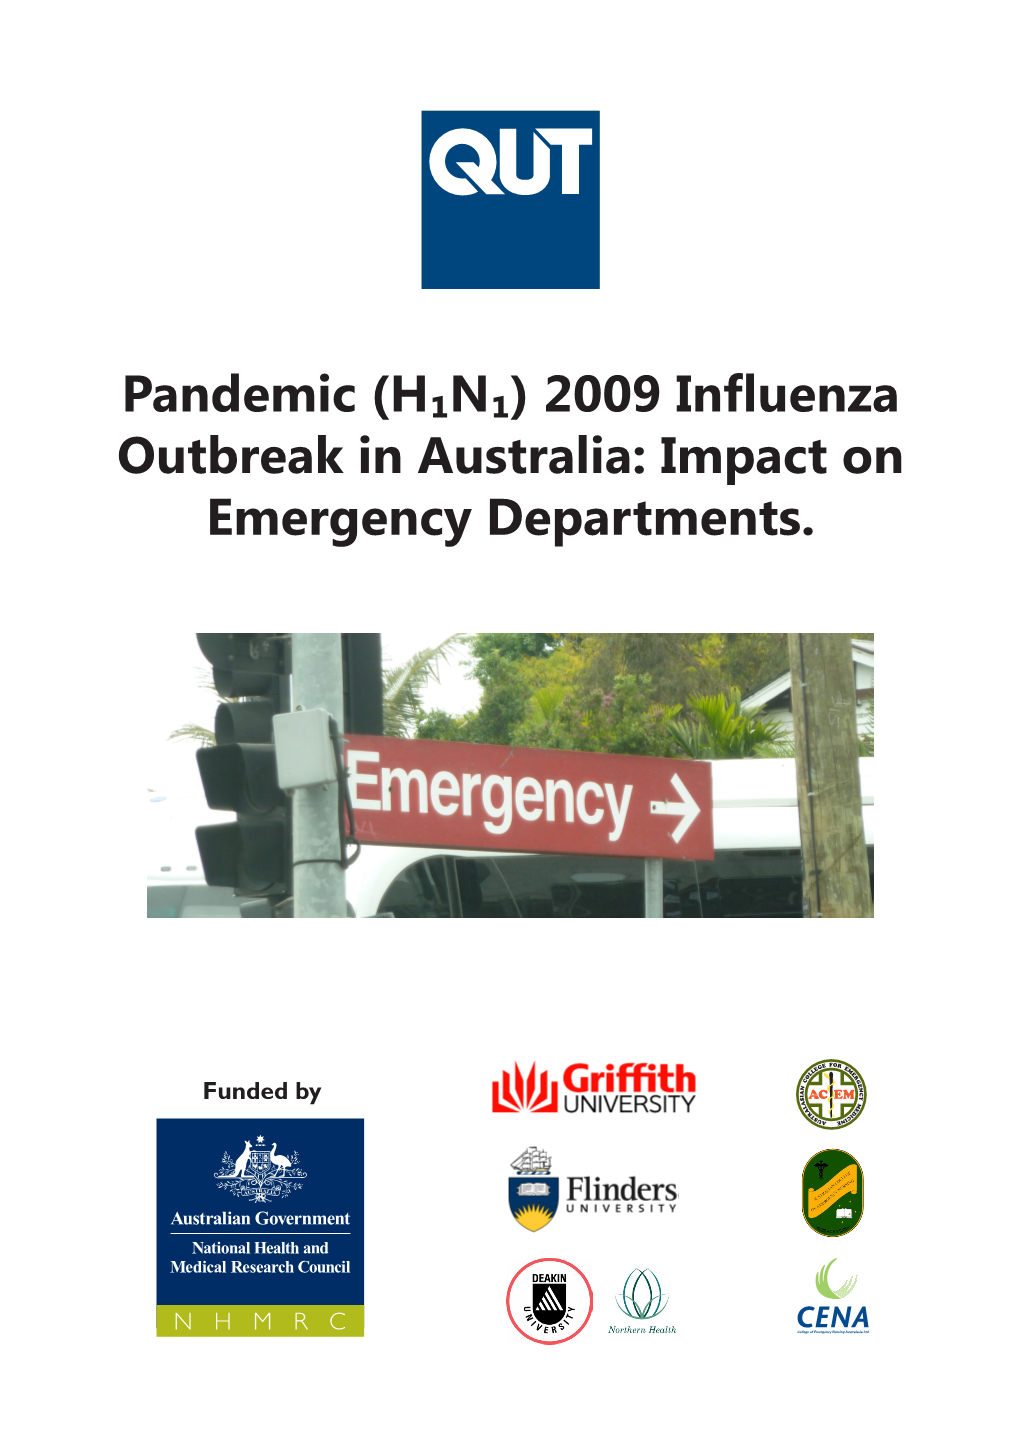 H1N1) 2009 Influenza Outbreak in Australia: Impact on Emergency Departments